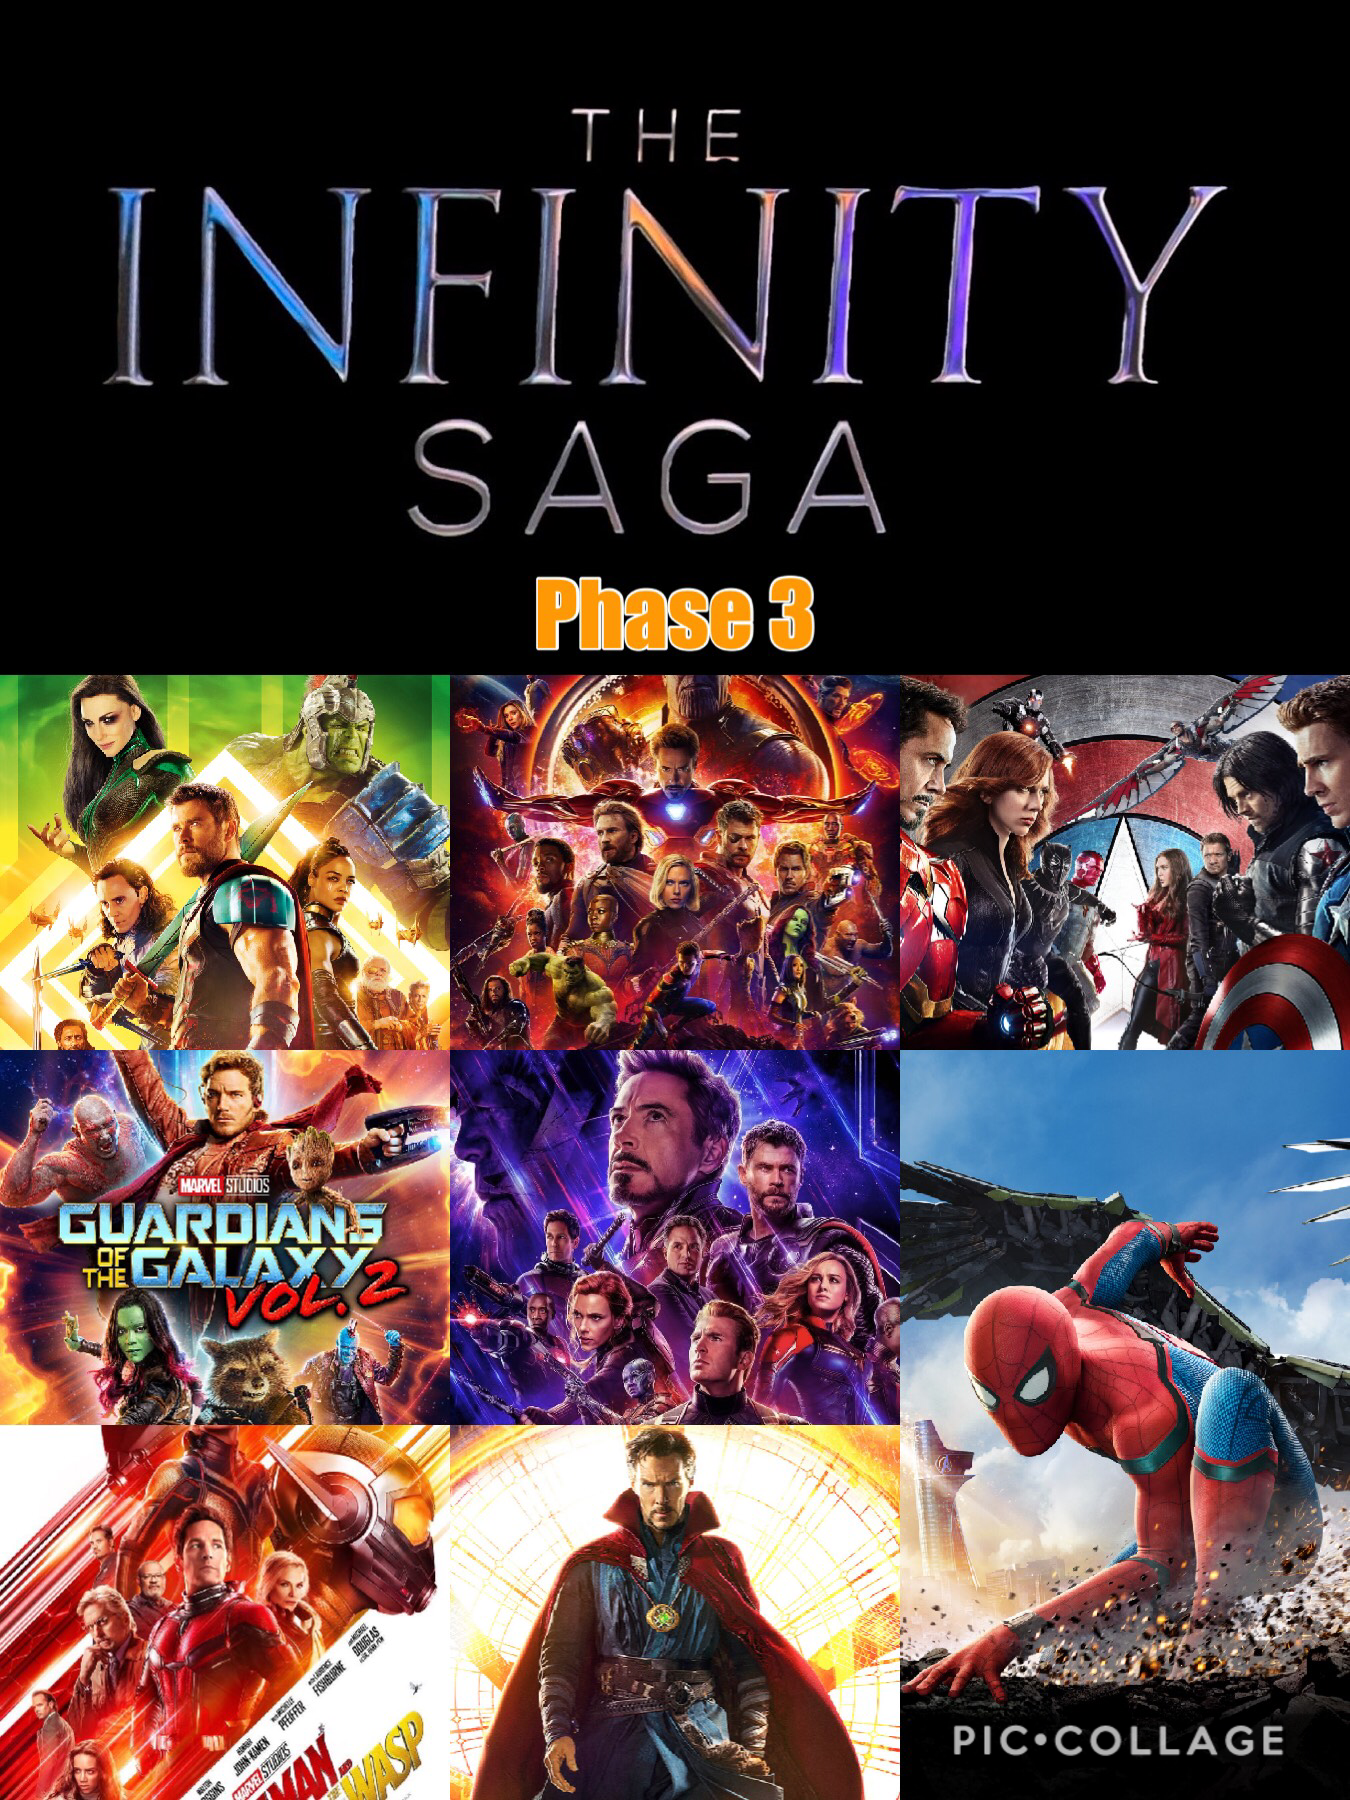 The Infinity Saga Phase 3 